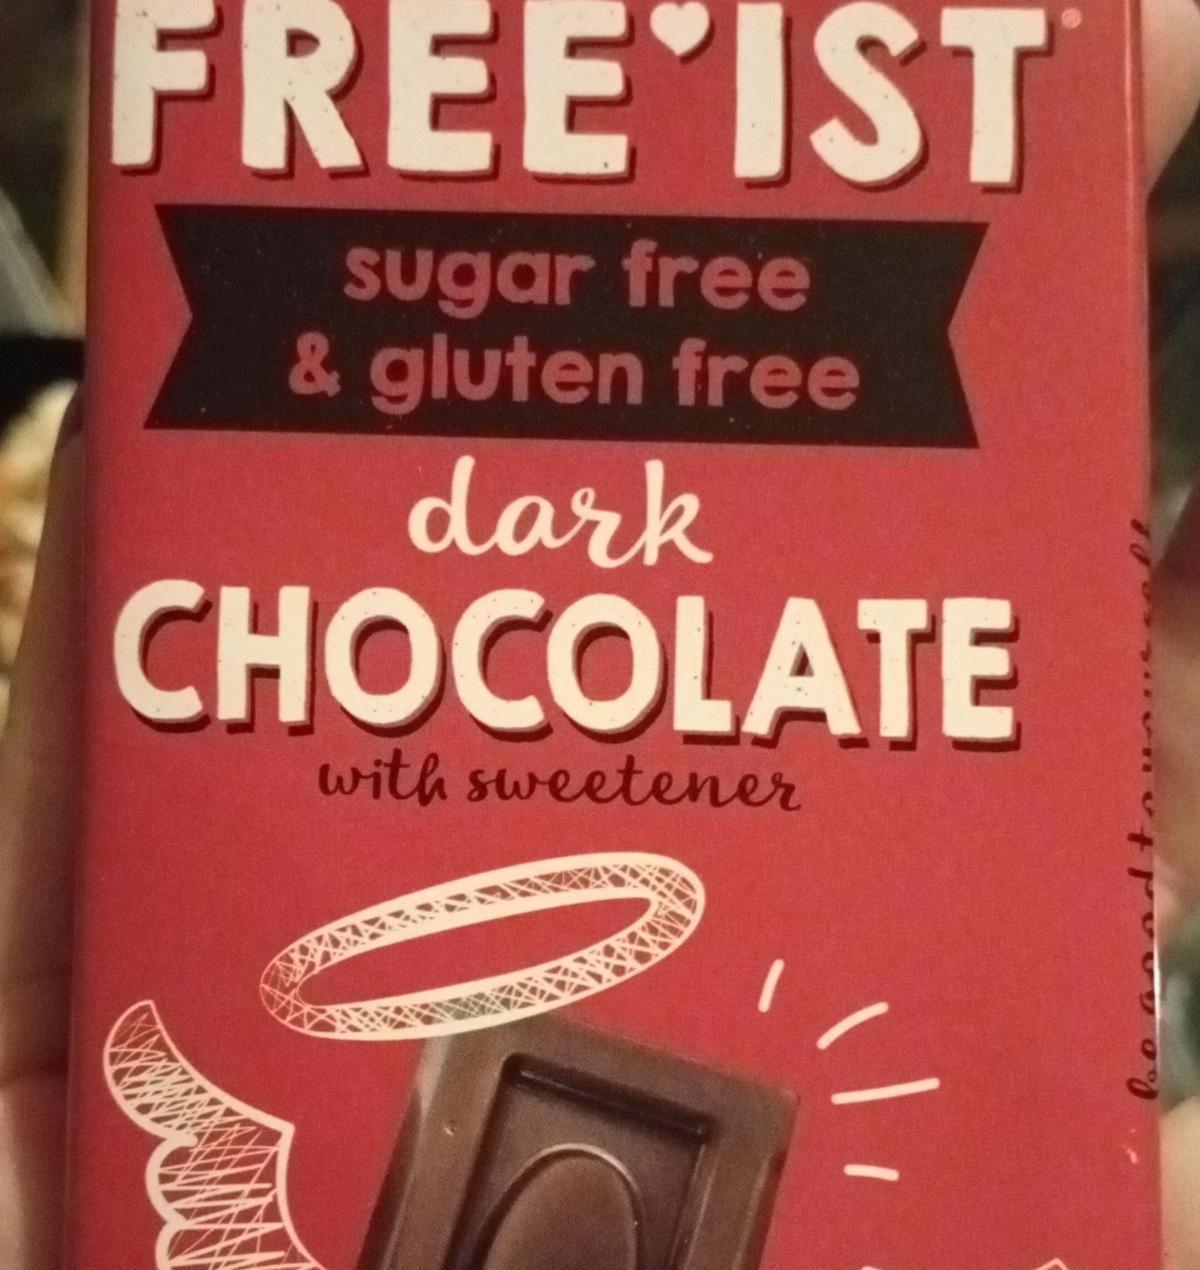 Fotografie - Dark chocolate with sweetener sugar-free & gluten-free Free'ist